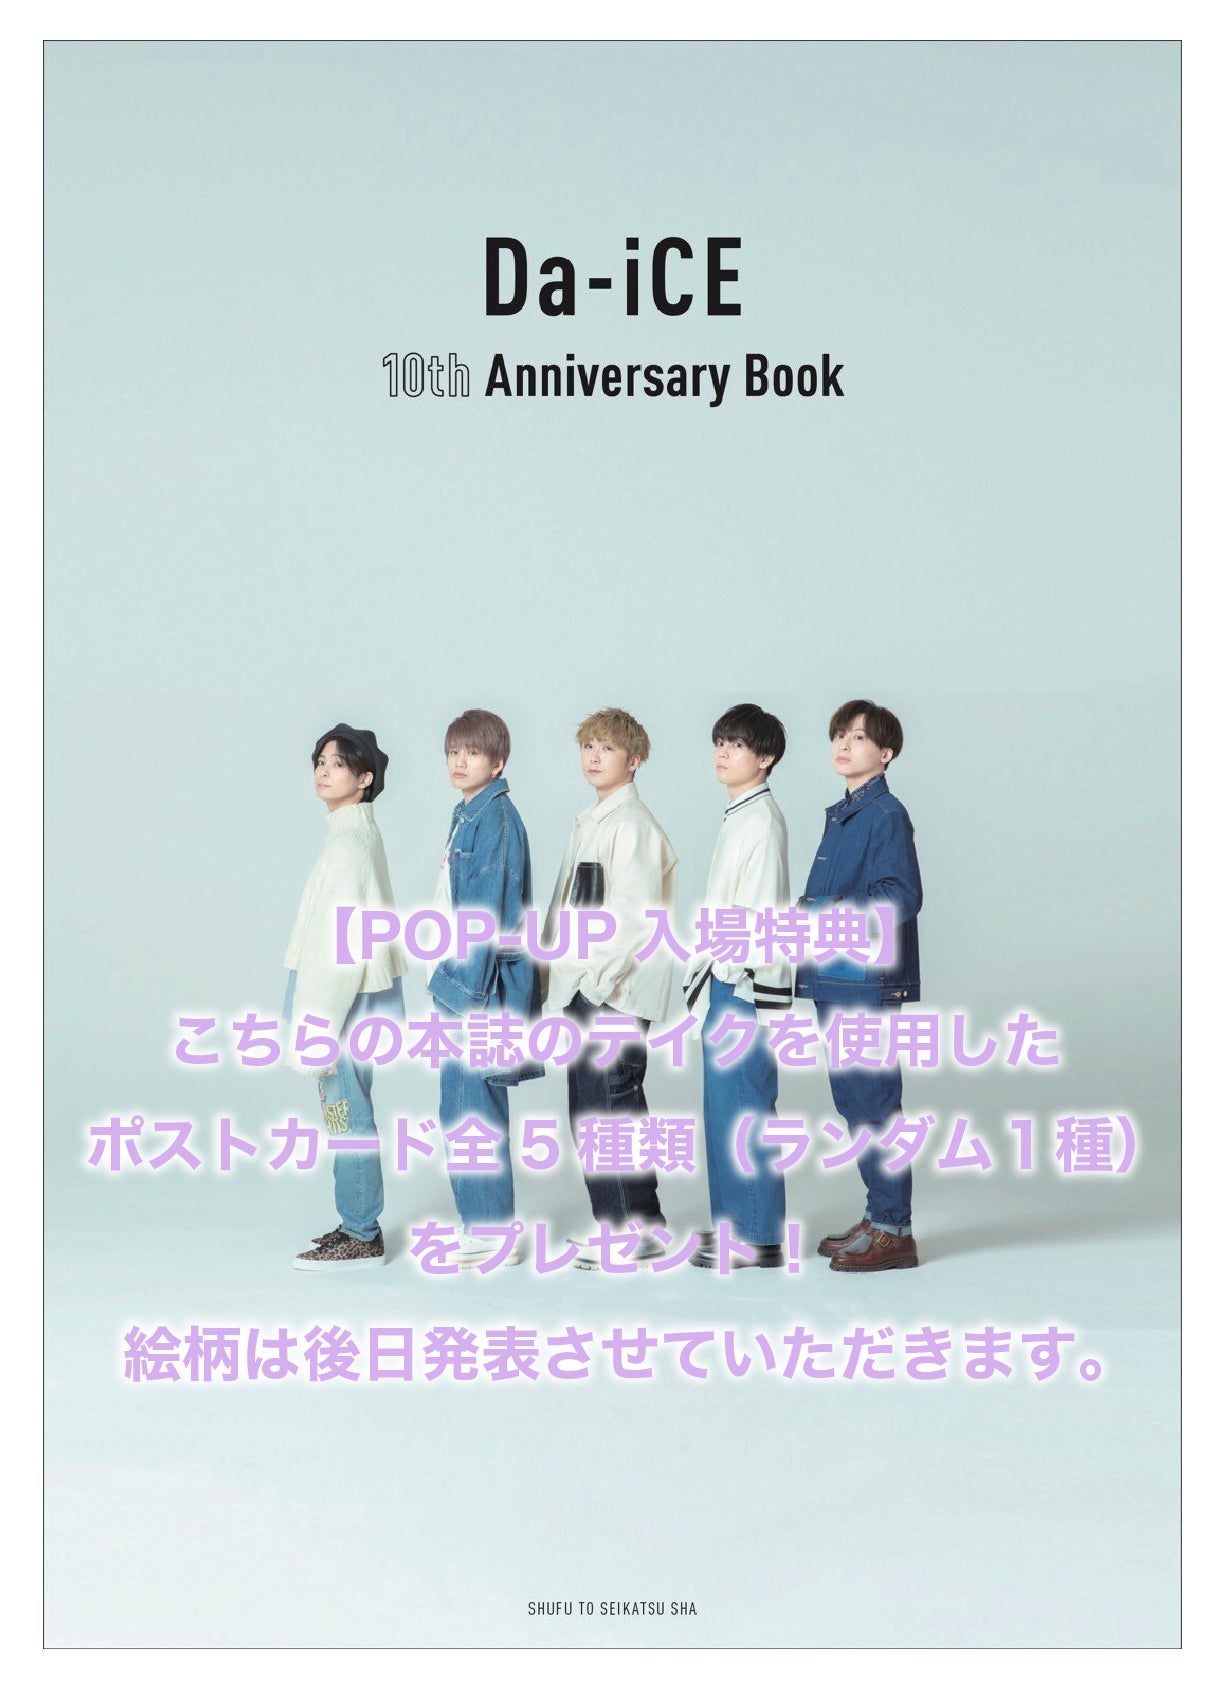 Da-iCE POP-UP STORE 期間限定で渋谷にオープン！ | Da-iCE(ダイス